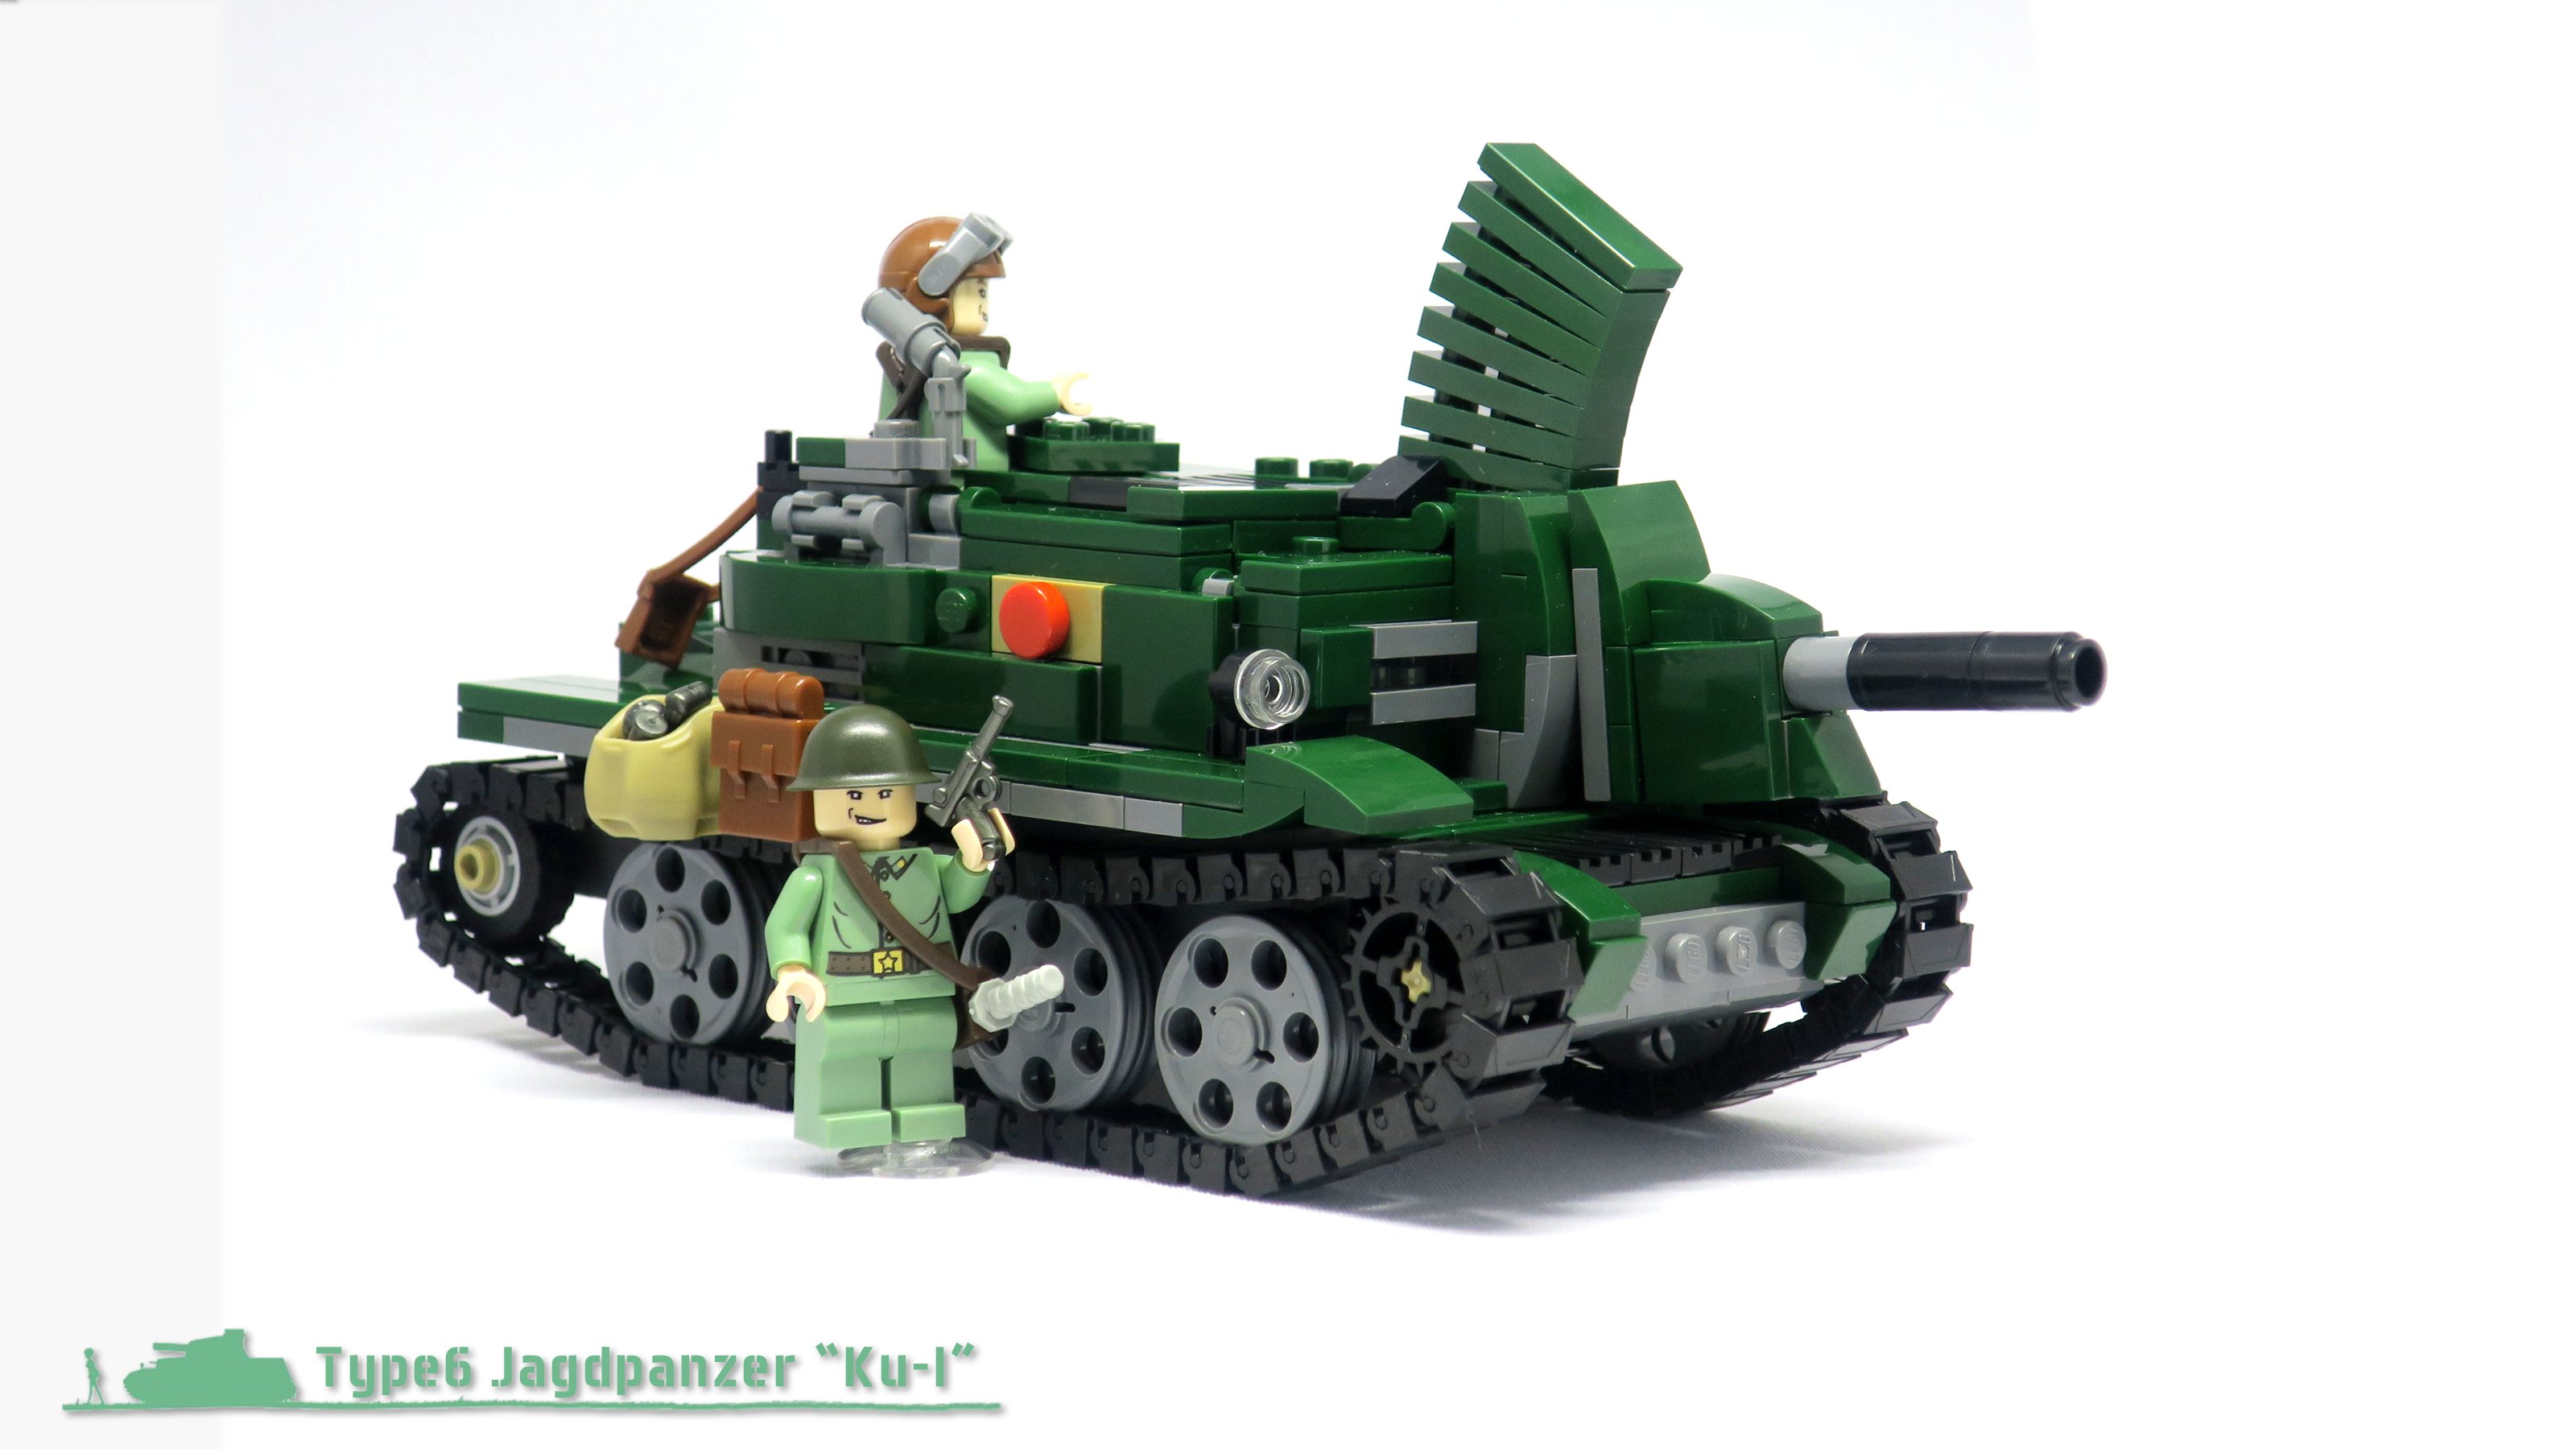 75 Nanago Japanese Afol レゴ 六式駆逐戦車 イ号 秘匿名称 クイ ドイツ国防軍 技師とともに開発した 日本初の駆逐戦車 主砲には3連発 可能な多弾速射砲 57mm 長口径 を採用 奇襲により多くの戦車を撃破した Lego レゴ レゴ戦車 レゴミリタリー 詳細は